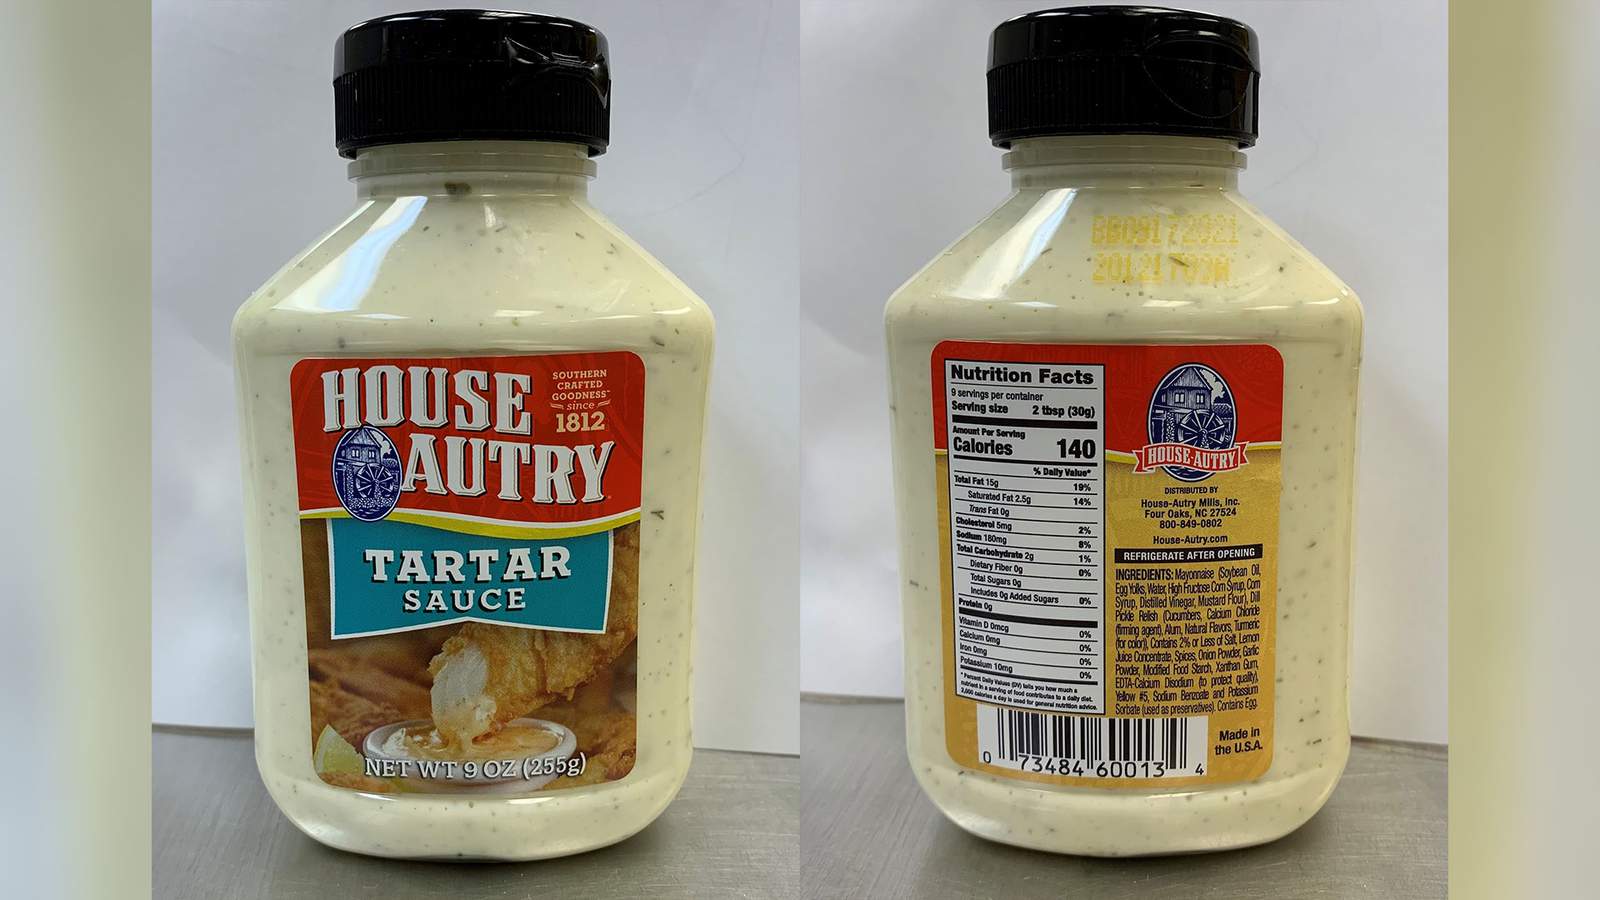 House Autry expands its tartar sauce recall